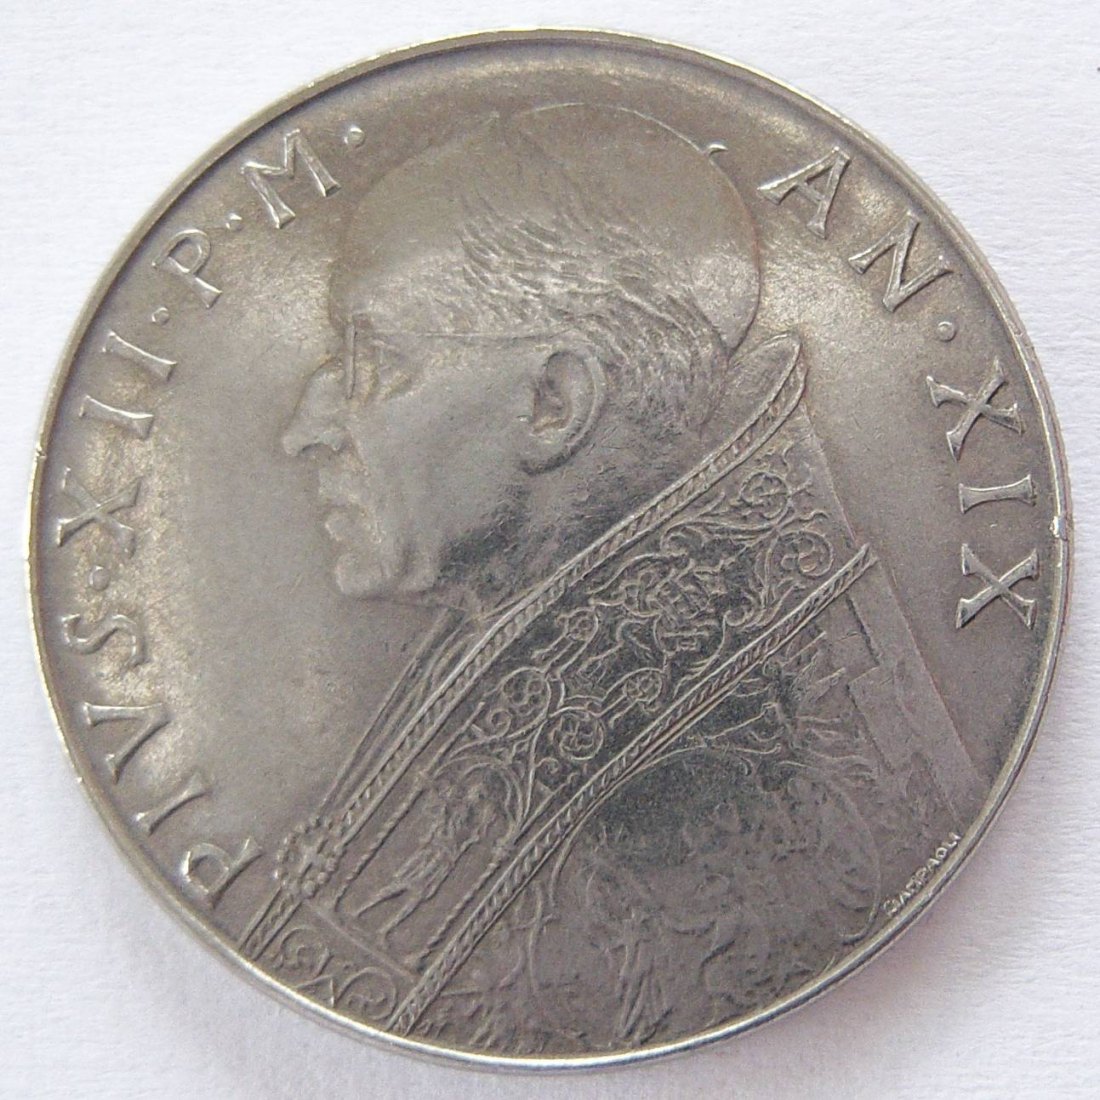  Vatikan 100 Lire 1957   